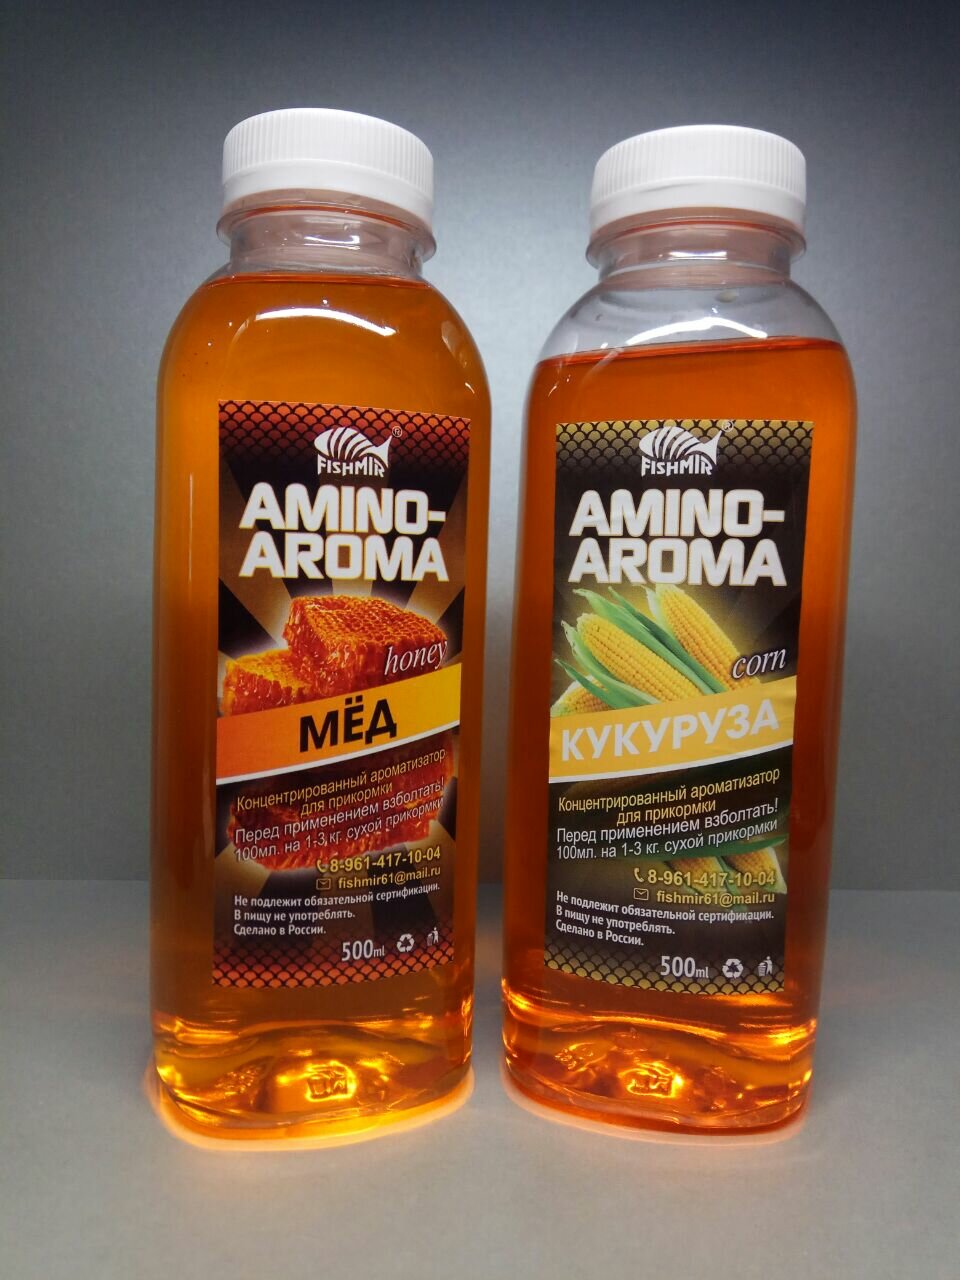 "МЁД" и "кукуруза" набор ароматизаторов для прикормки, 2 флакона по 500 мл, AMINO AROMA от FISHMIR